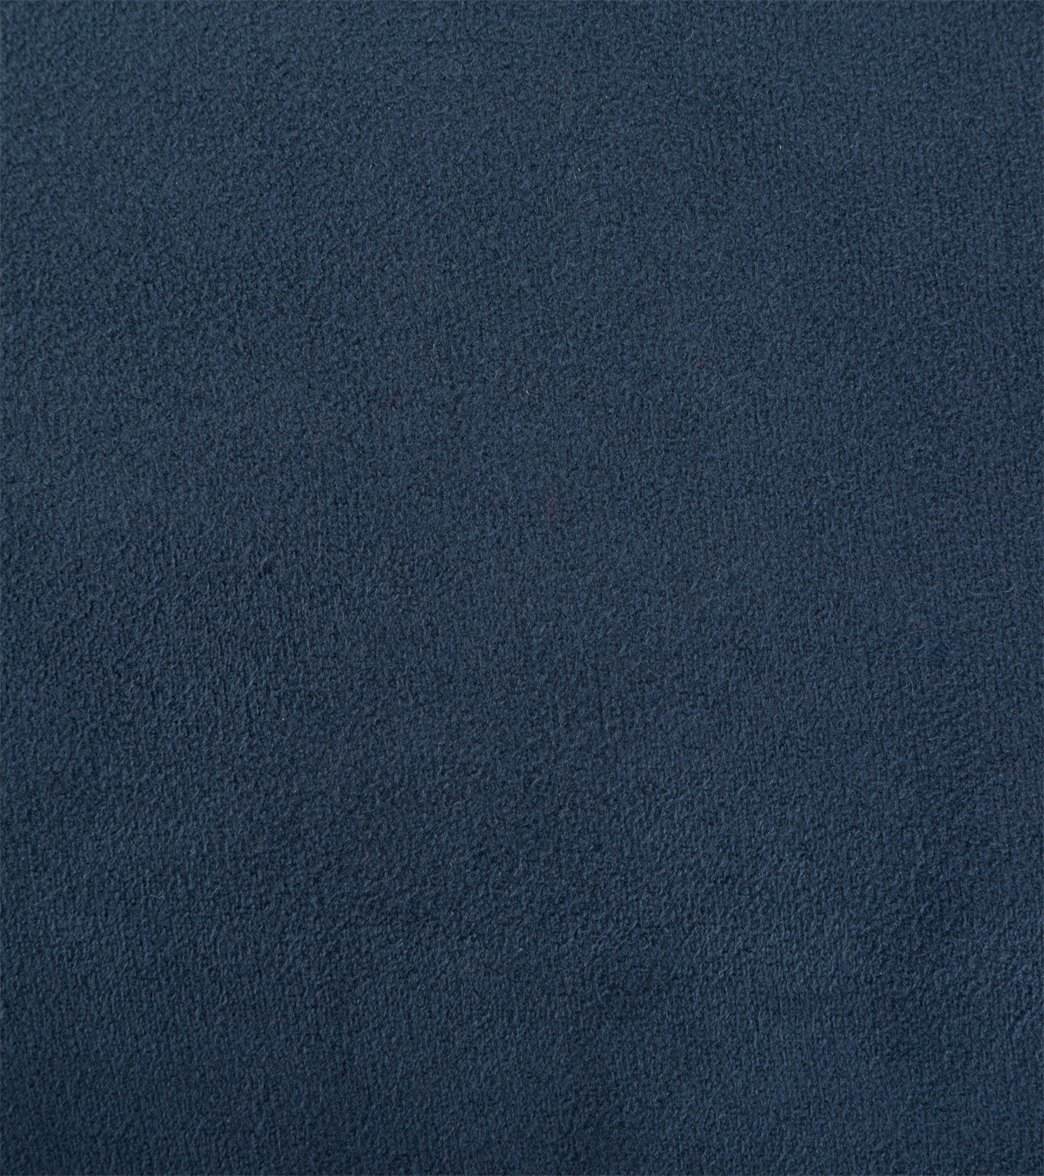 Manduka Rectangular Bolster - Star Dye Clear Blue - enlight™ technology